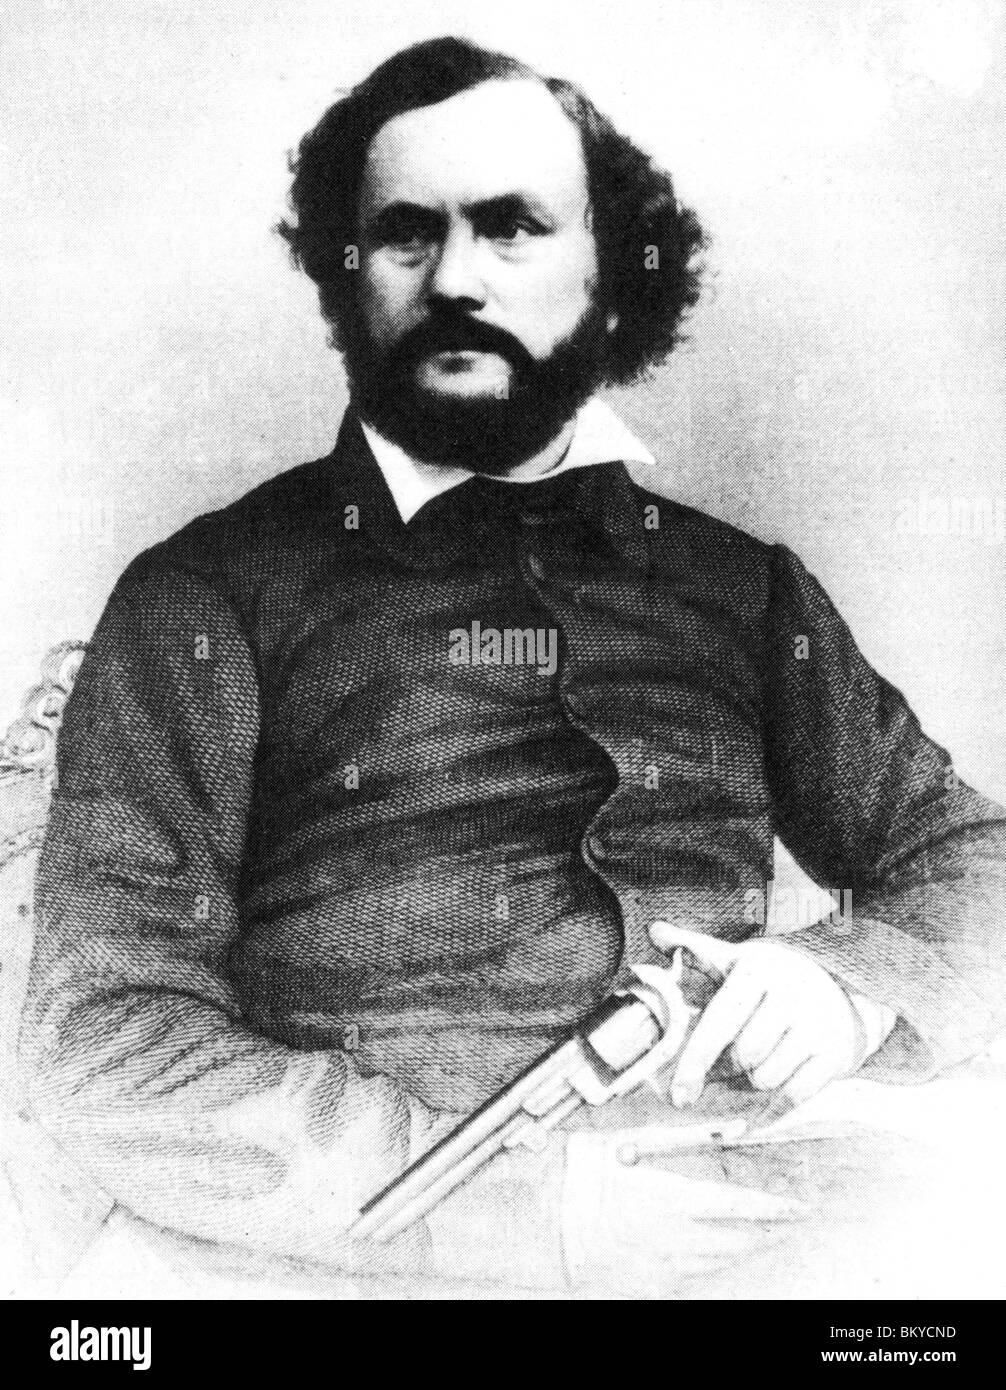 SAMUEL COLT - American gunsmith and inventor (1814-1862) Stock Photo